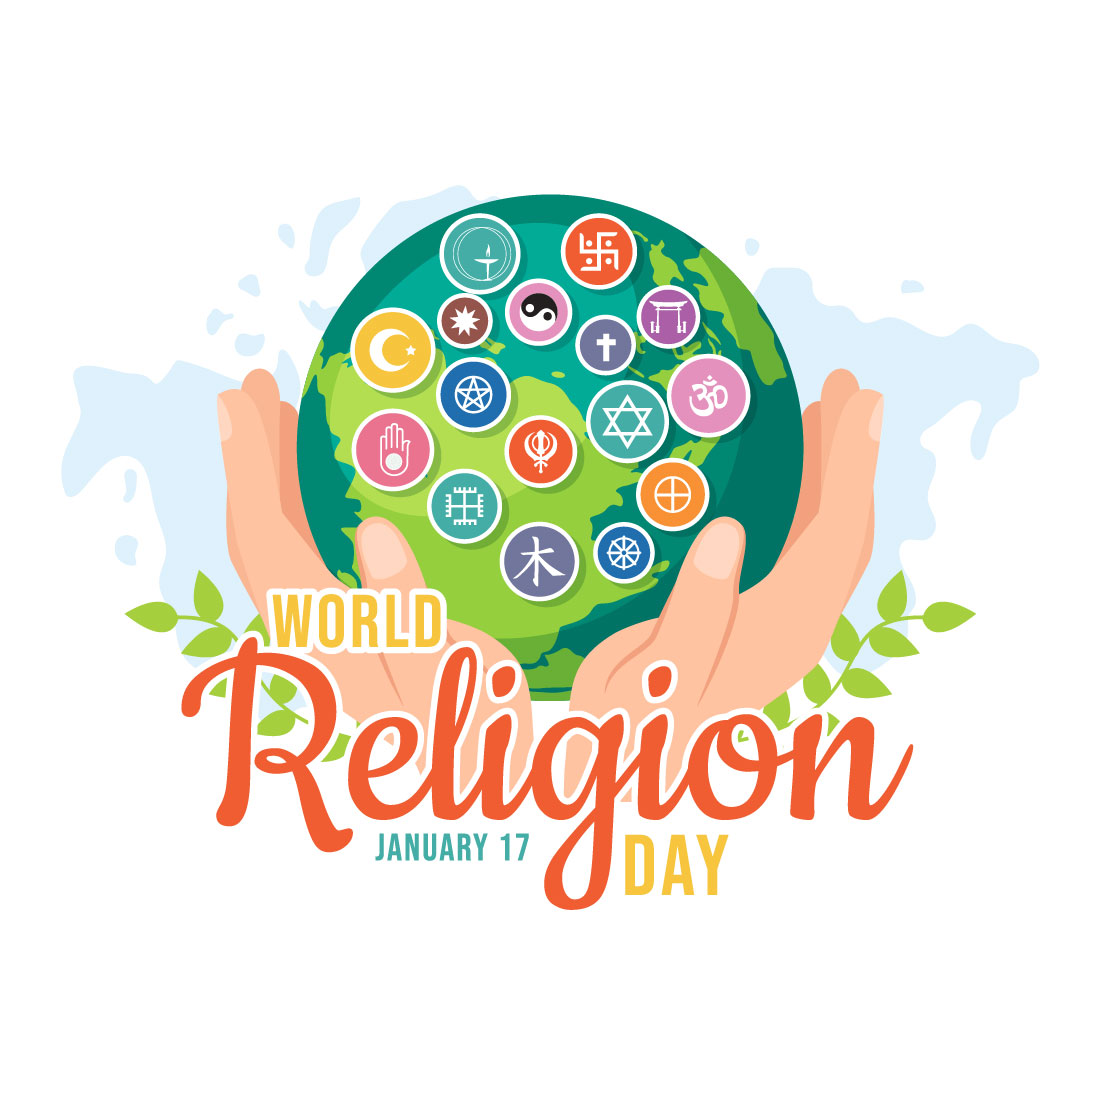 12 World Religion Day Illustration cover image.